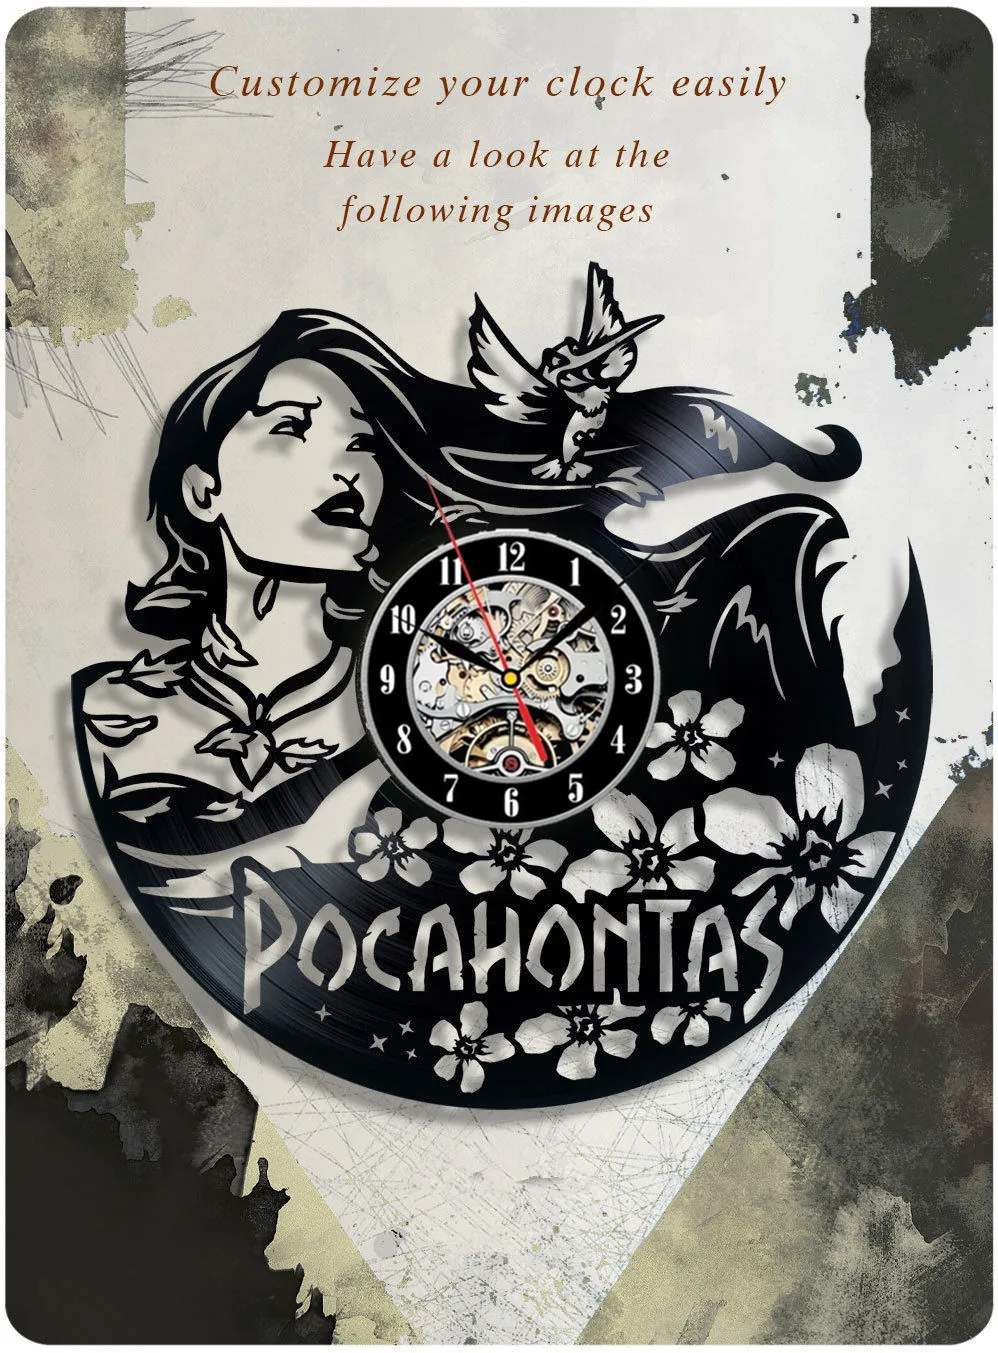 Details about   Pocahontas Vinyl Record Wall Clock Decor Handmade 2619 